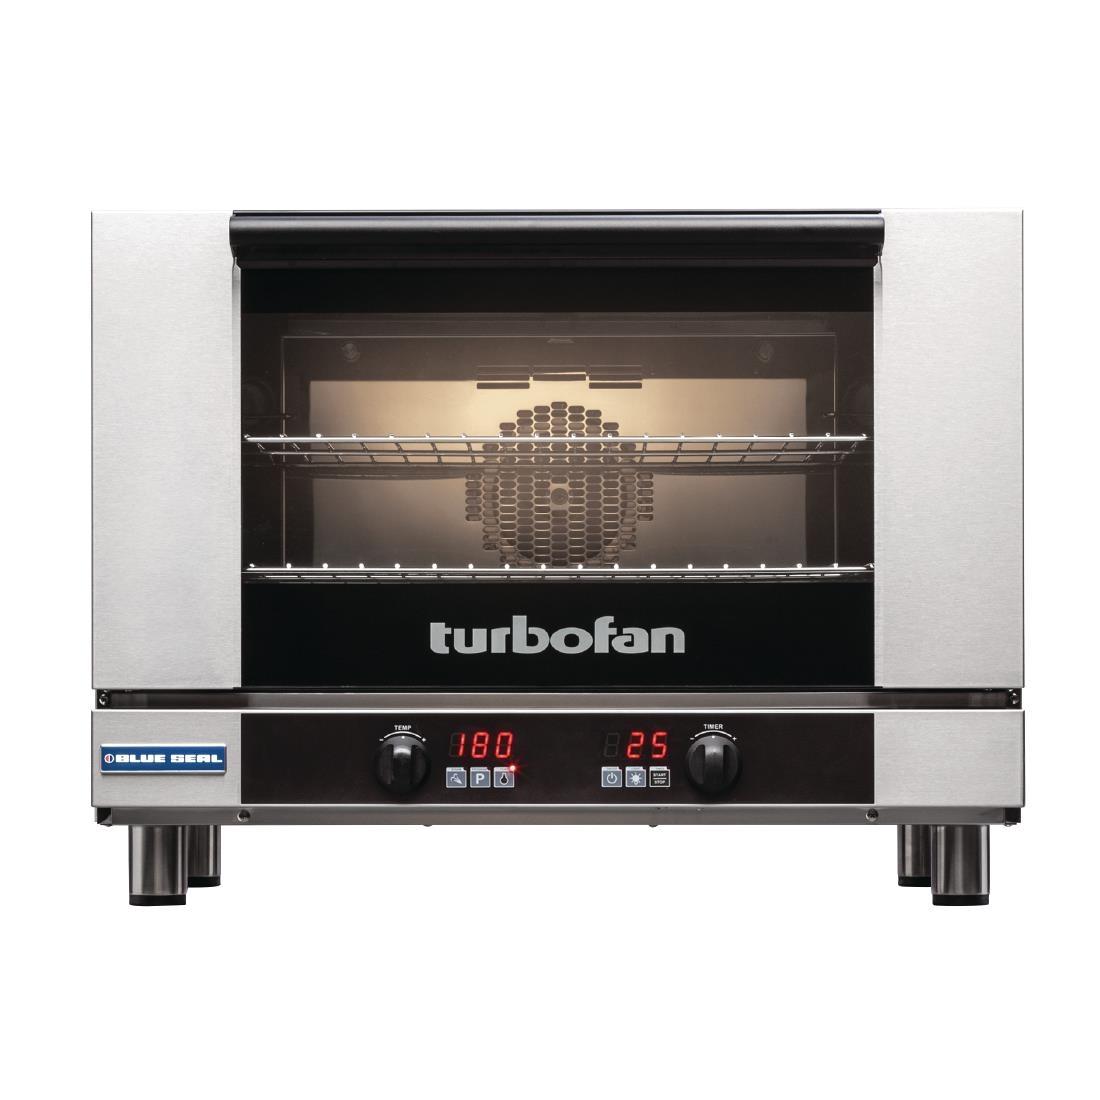 Blue Seal Turbofan Convection Oven E27D2 - CP995  - 1